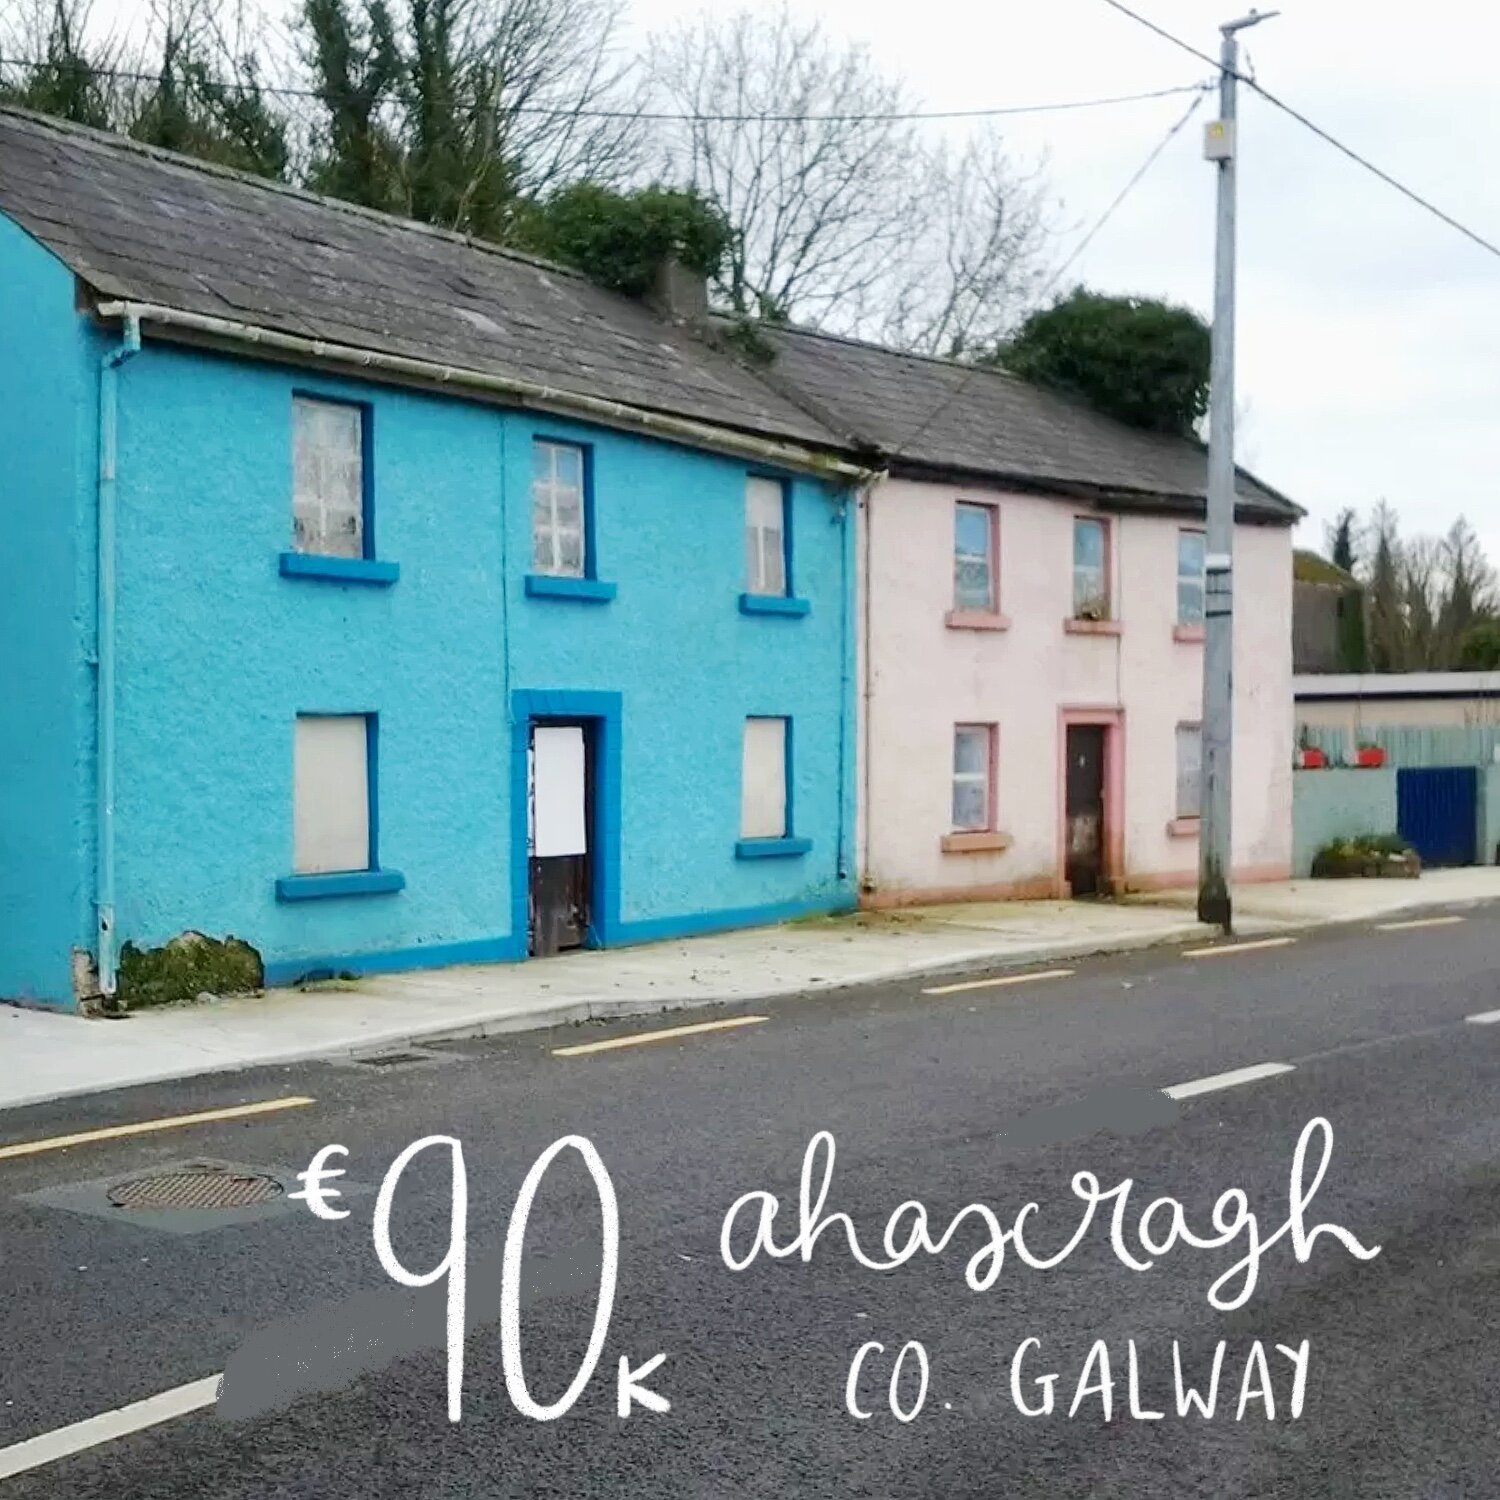 Ahascragh, Co. Galway. €90k